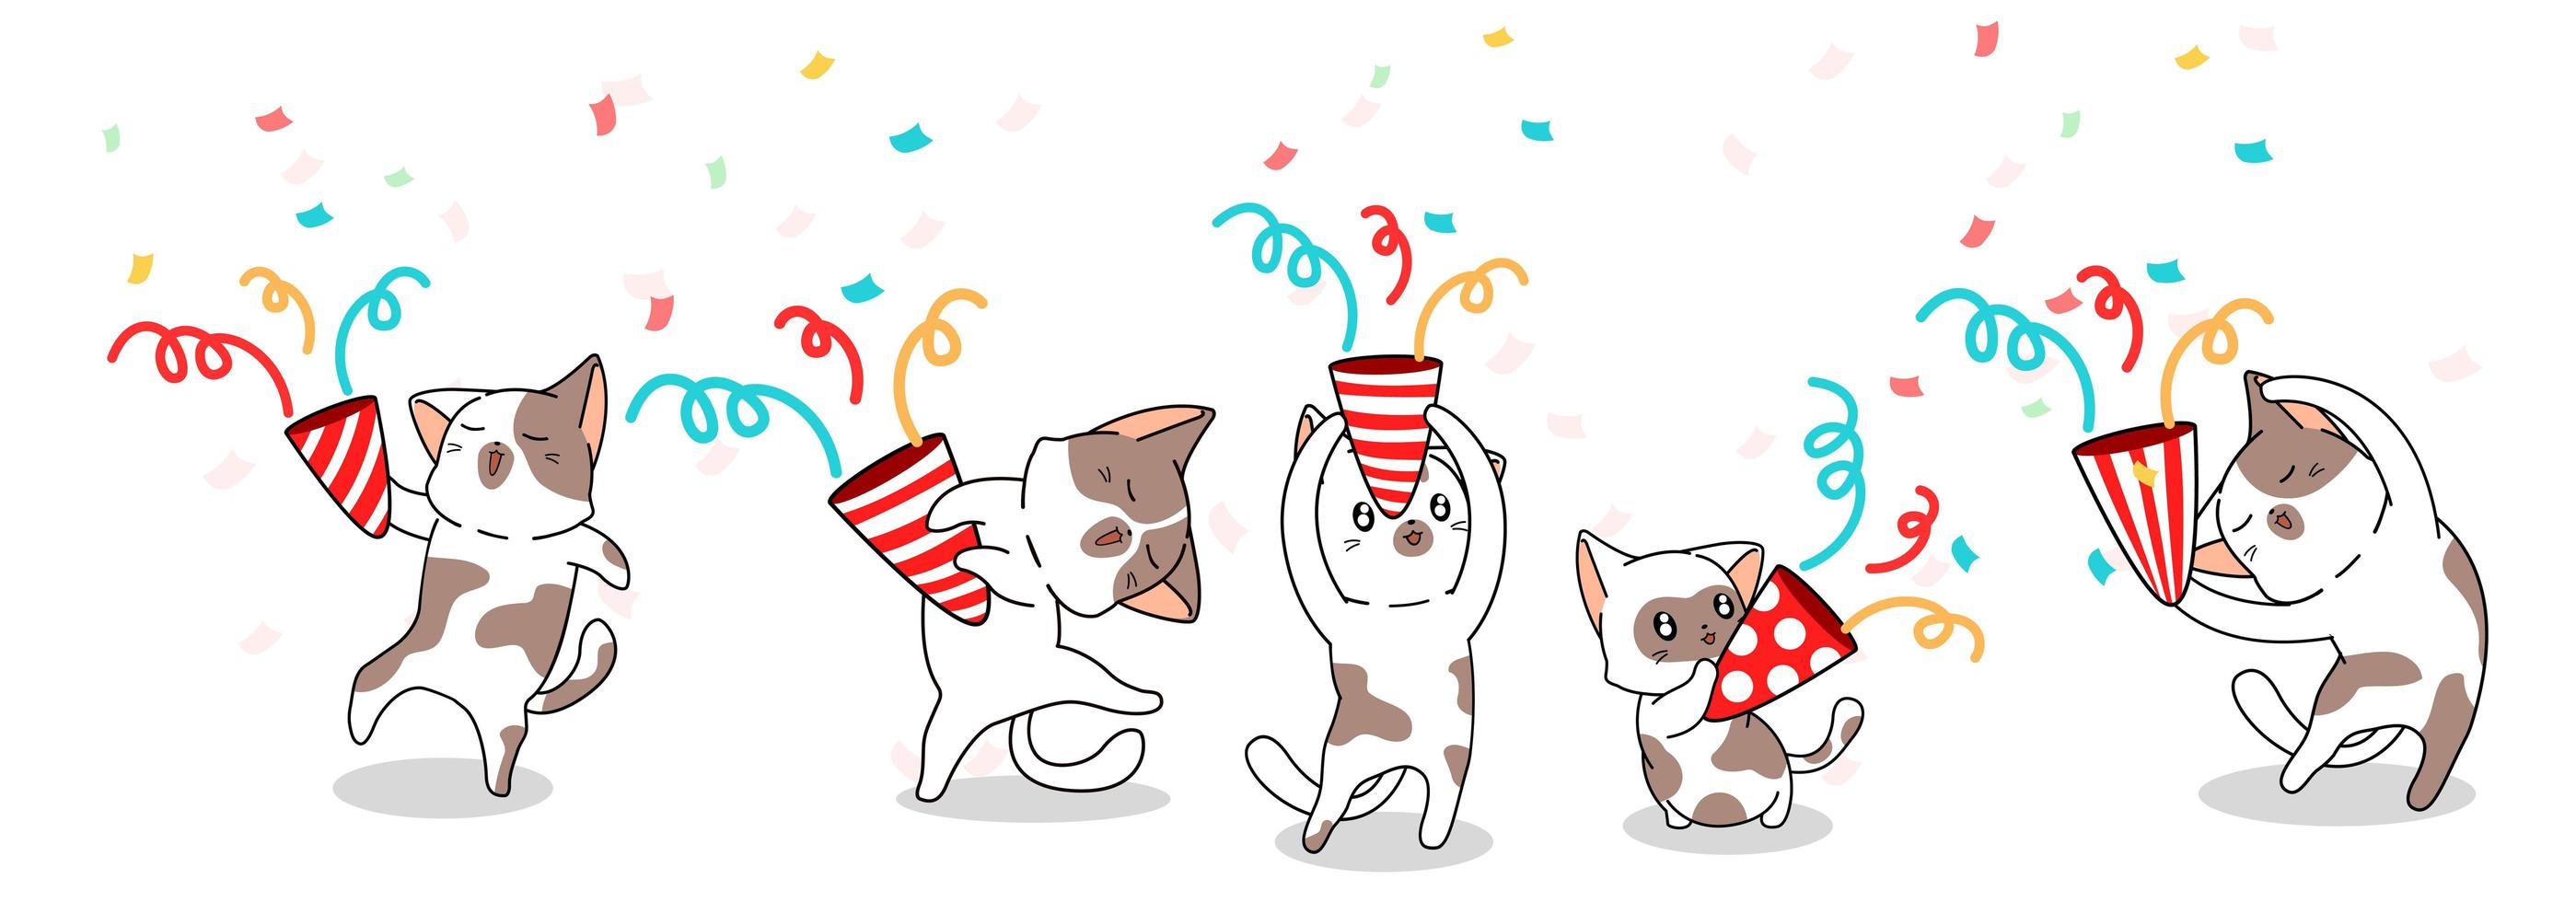 5 süße Katzen feiern vektor